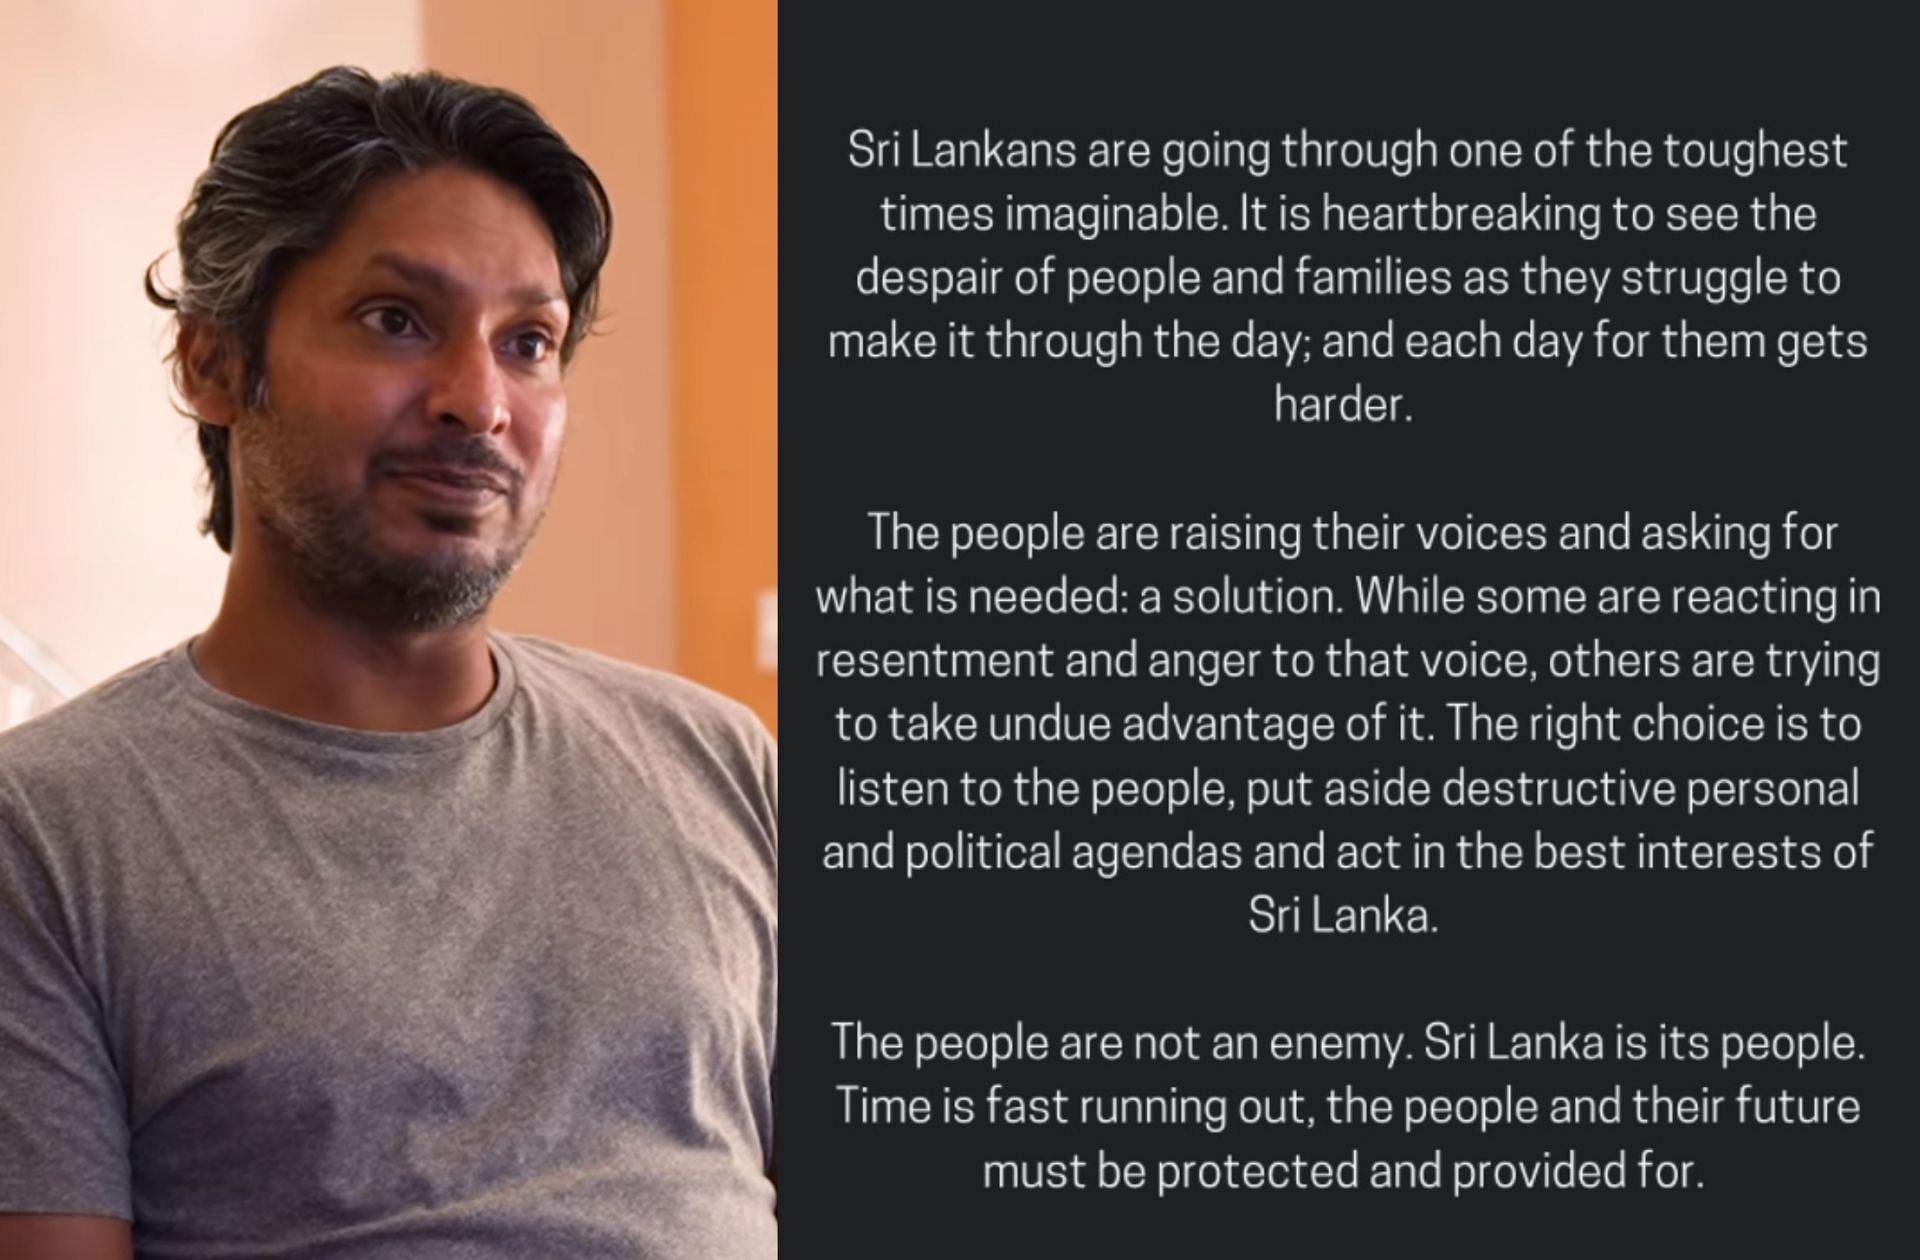 Kumar Sangakkara reacts to the struggles of the Sri Lankan people